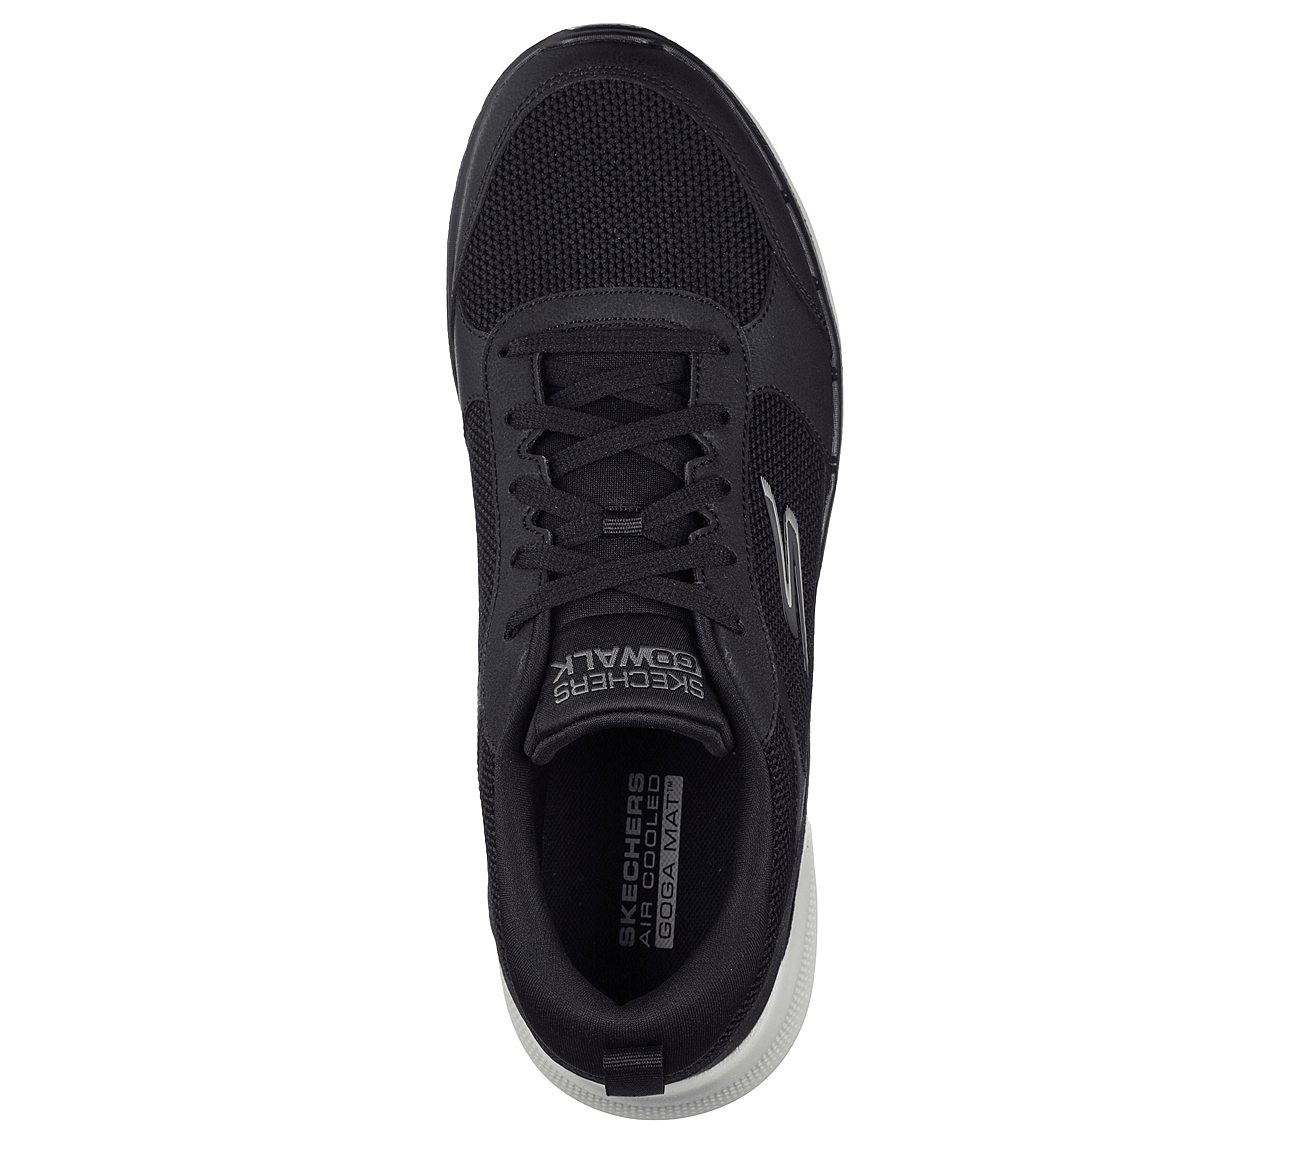 GO WALK 6 - COMPETE, BLACK/GREY Footwear Top View